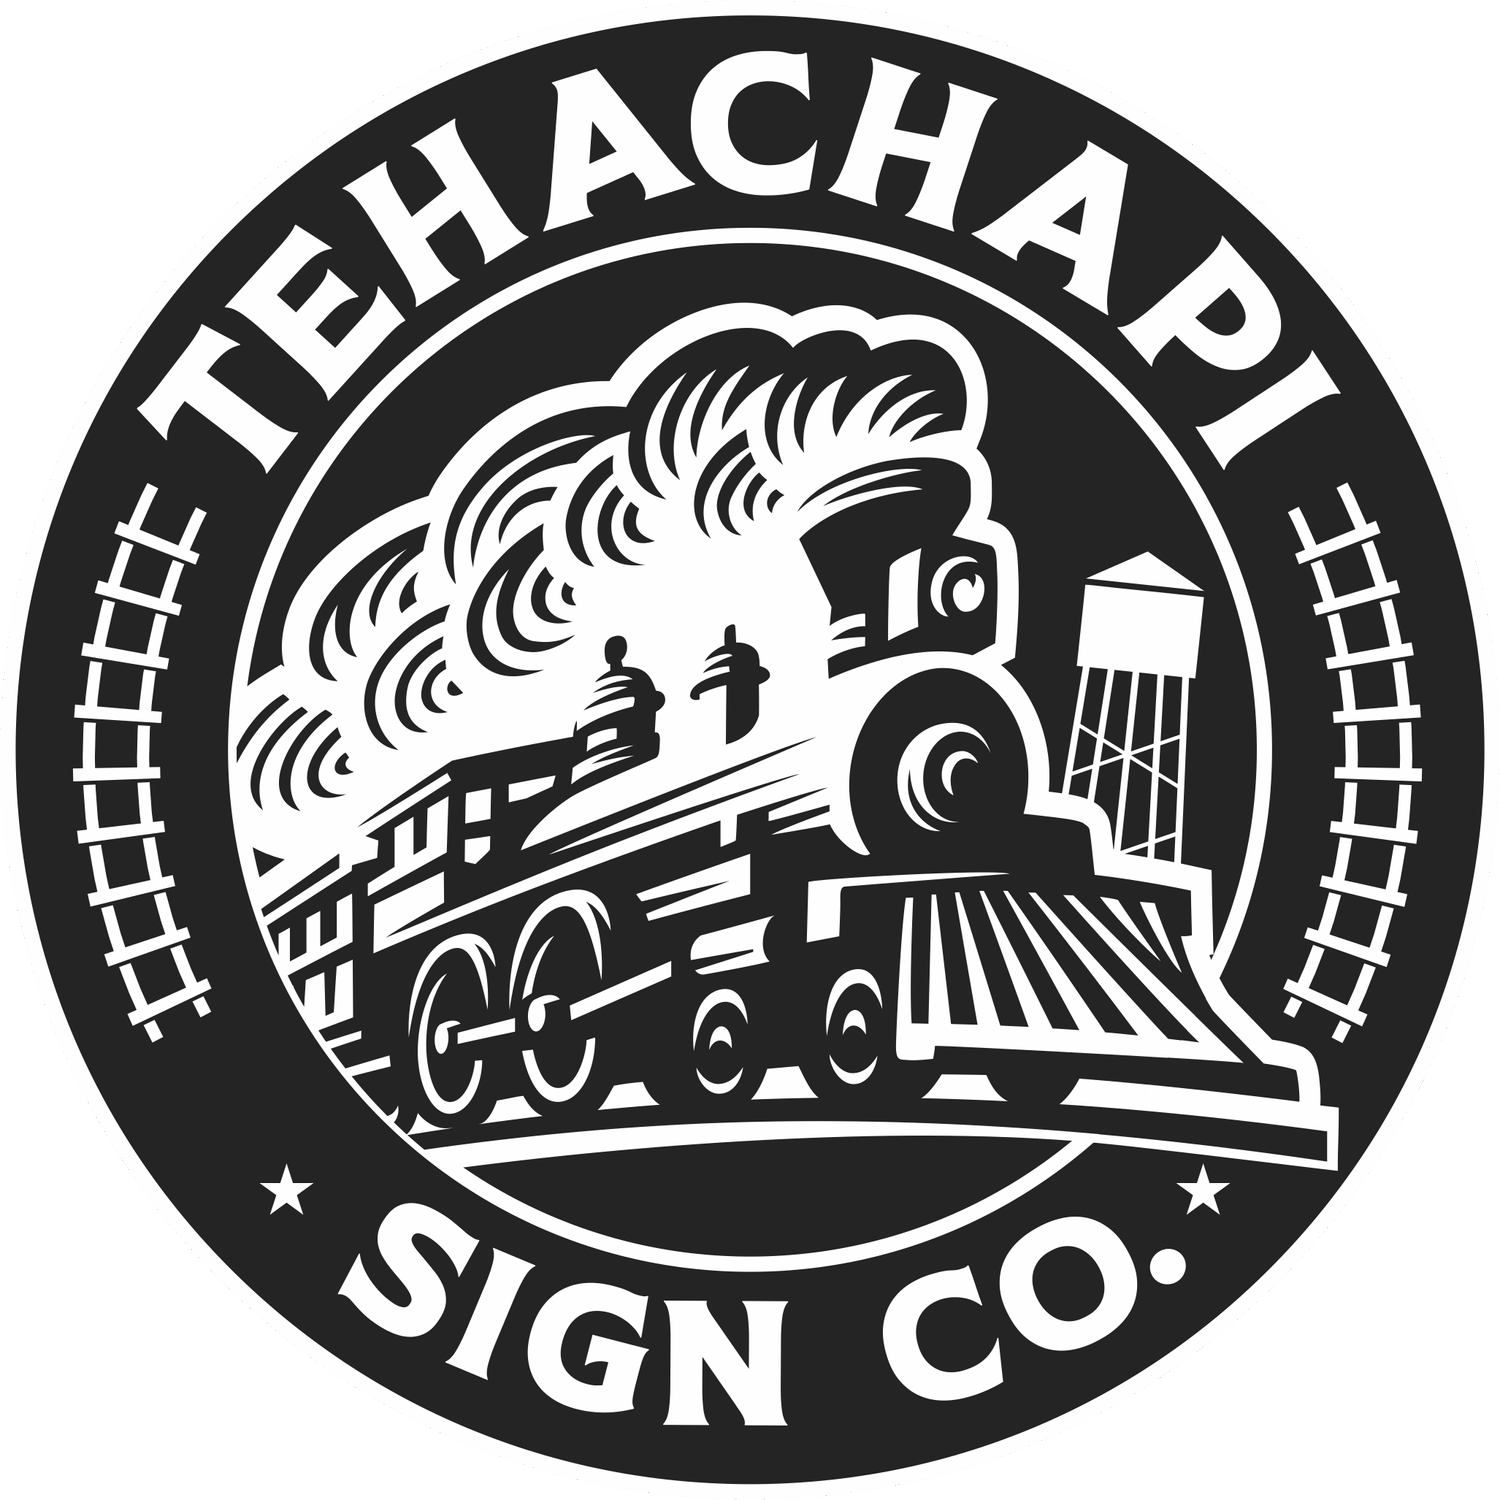 Tehachapi Signs Co.